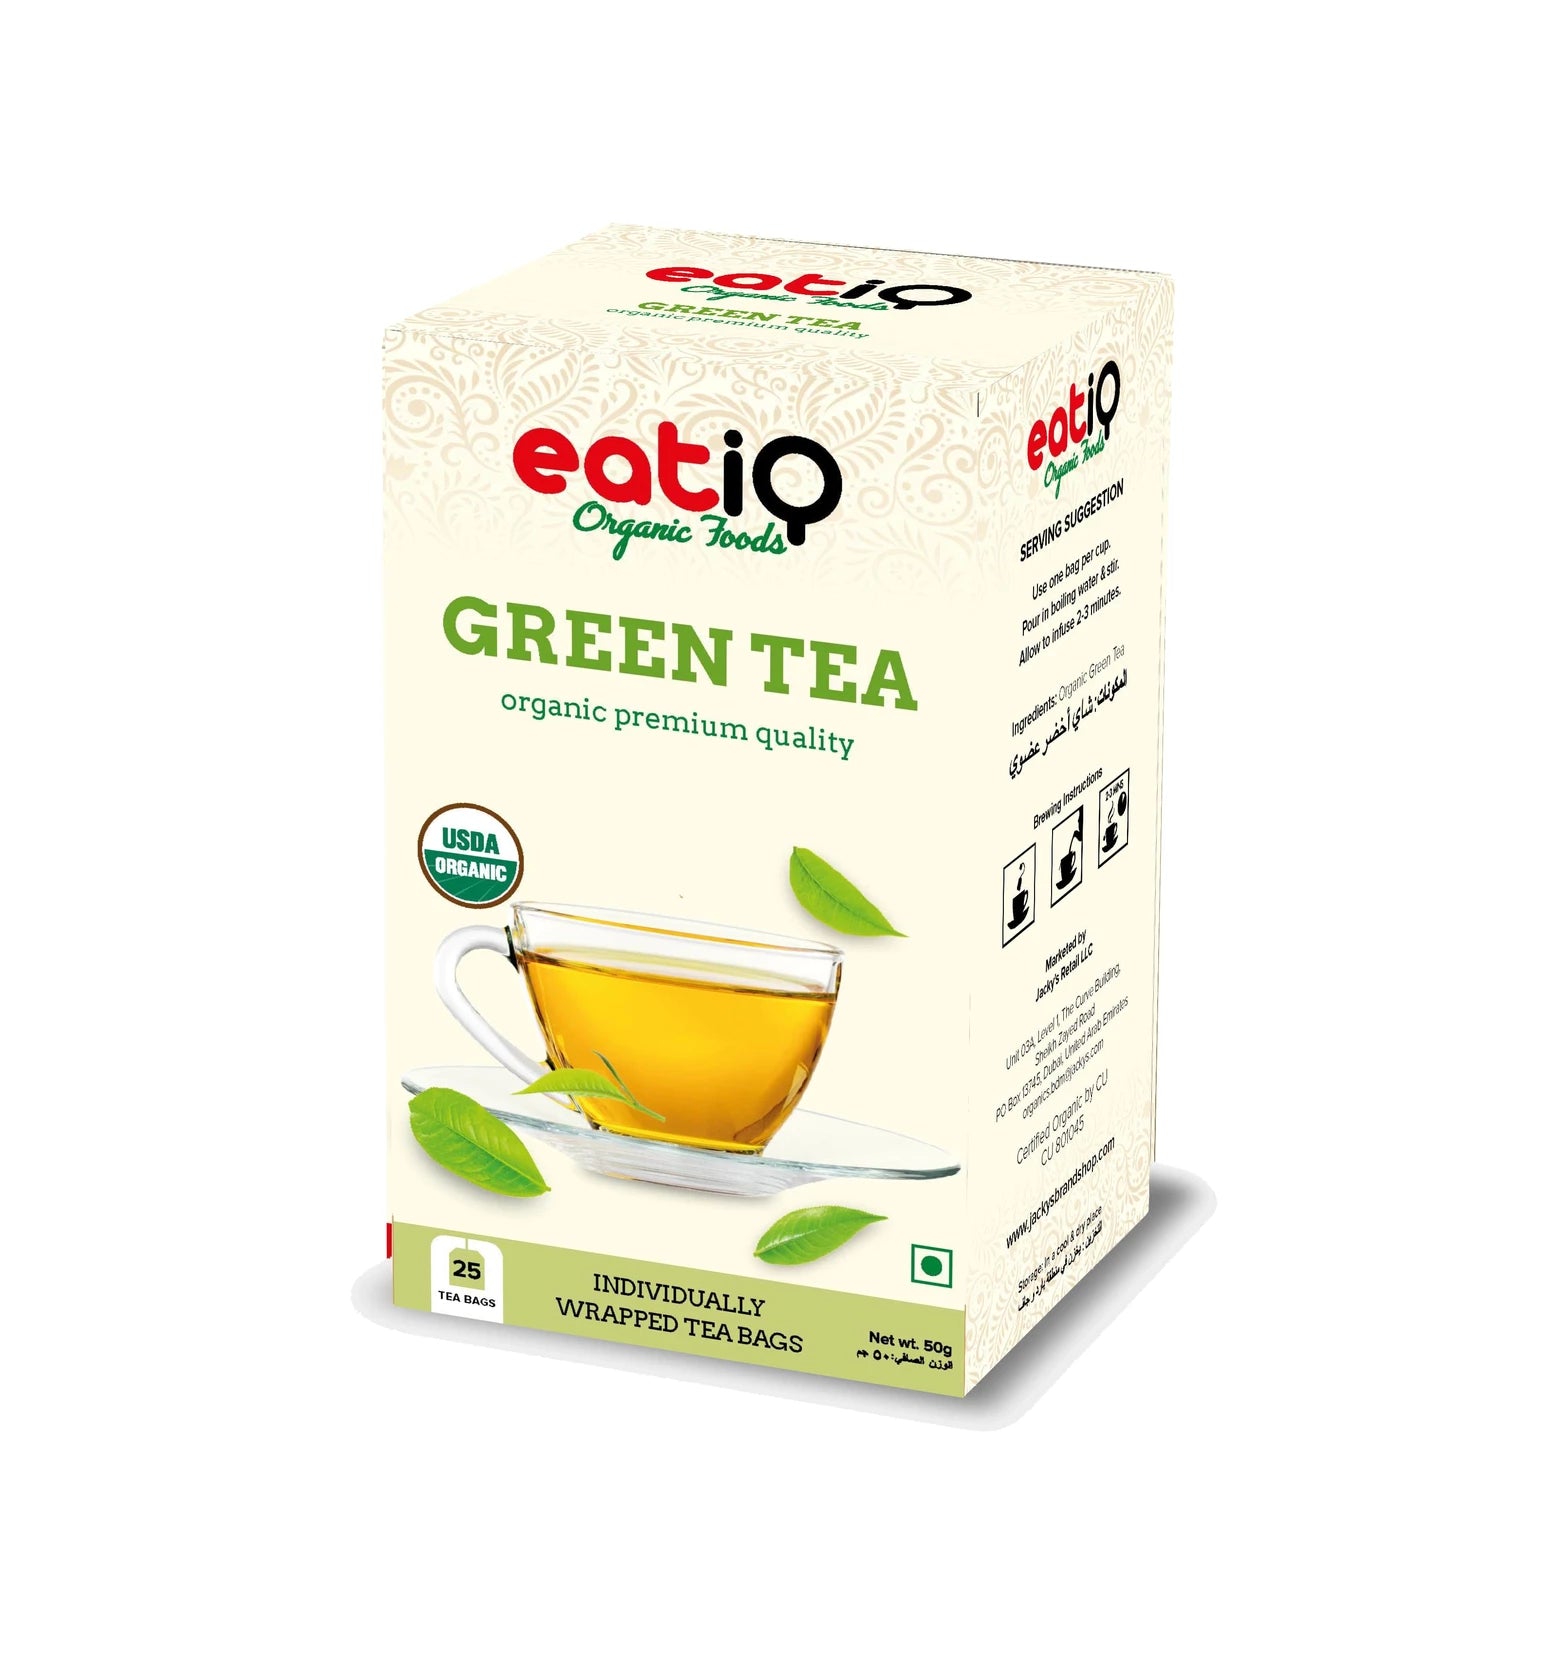 EATIQ ORGANIC FOODS Green Tea, 50g